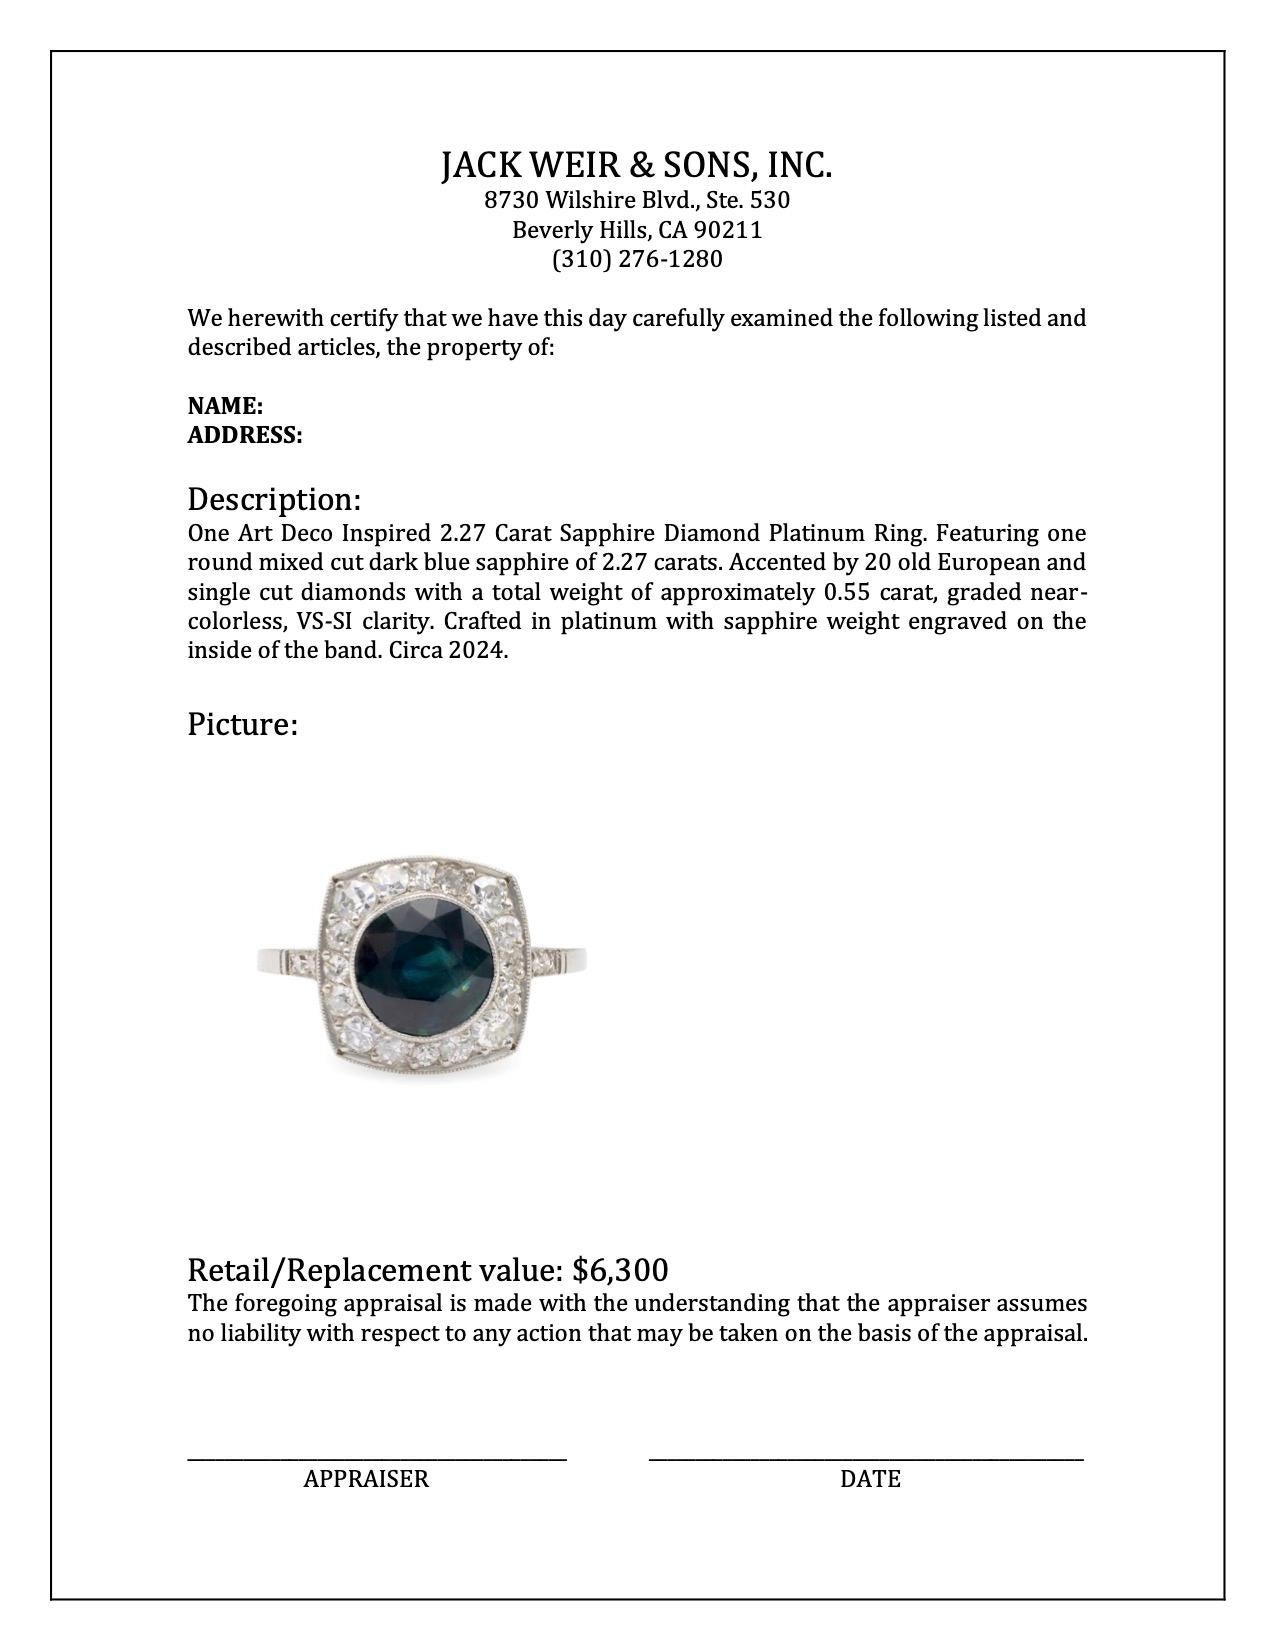 Women's or Men's Art Deco Inspired 2.27 Carat Sapphire Diamond Platinum Ring For Sale